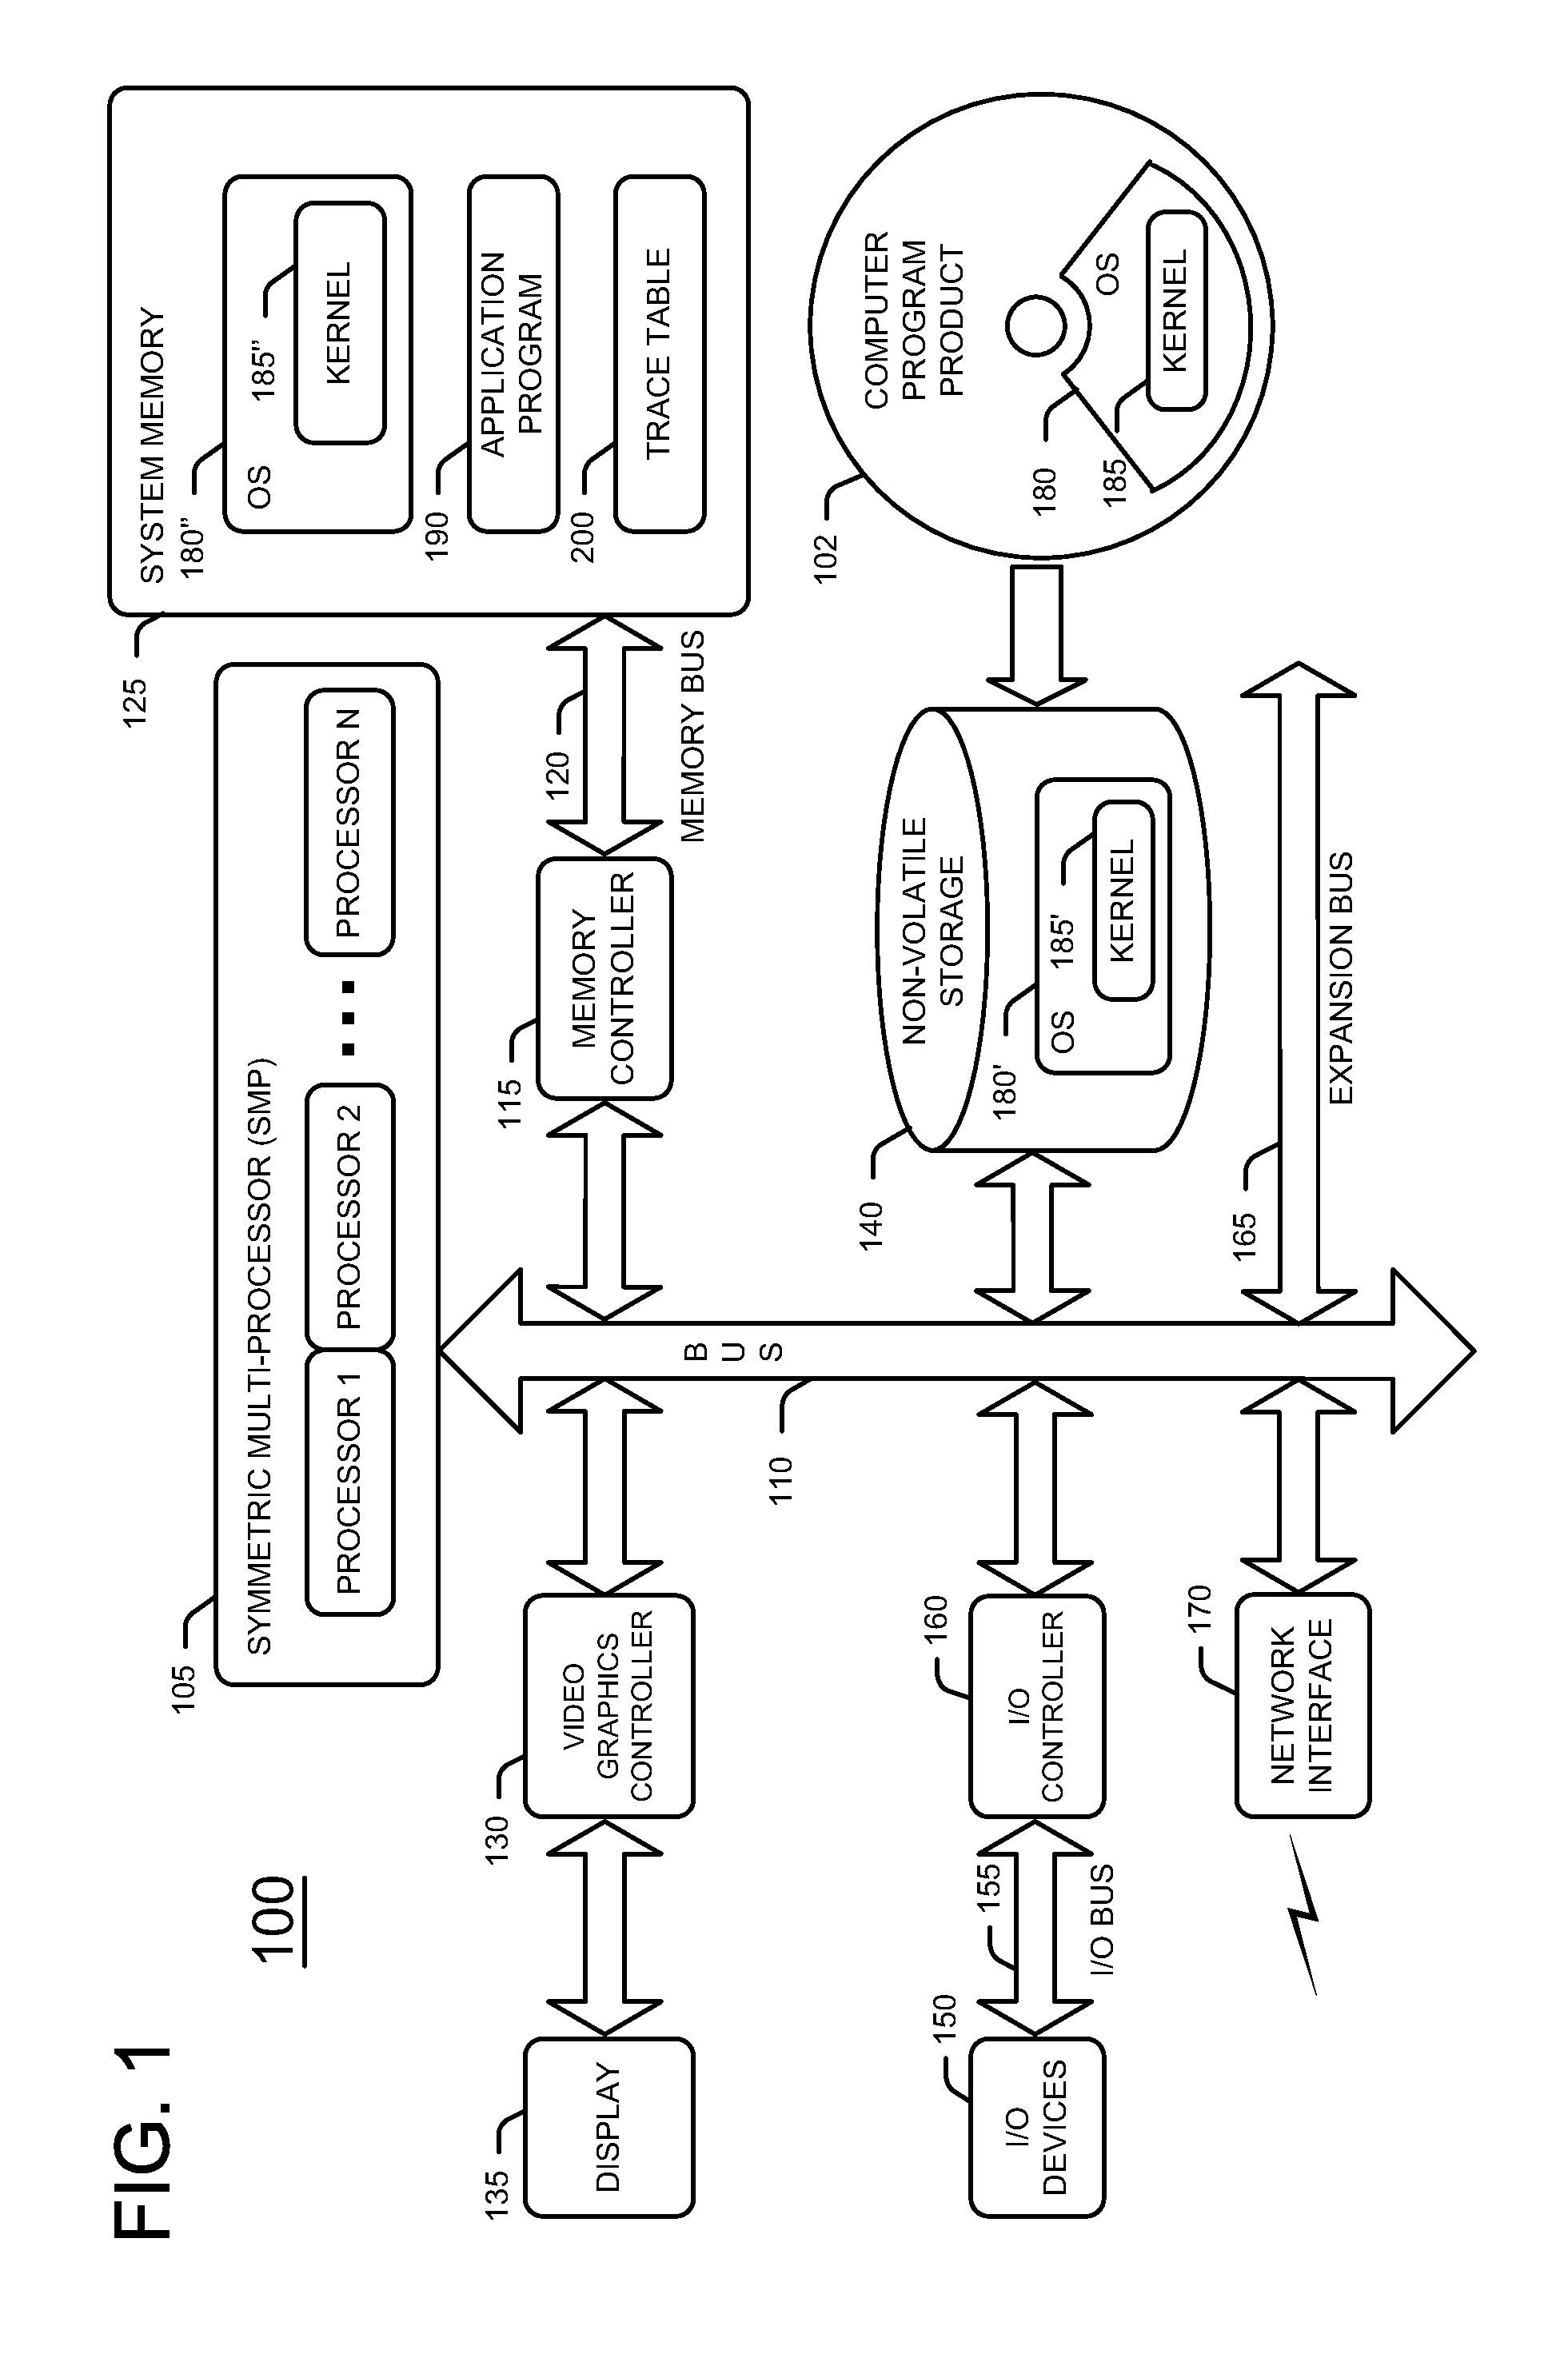 Symmetric multi-processor lock tracing